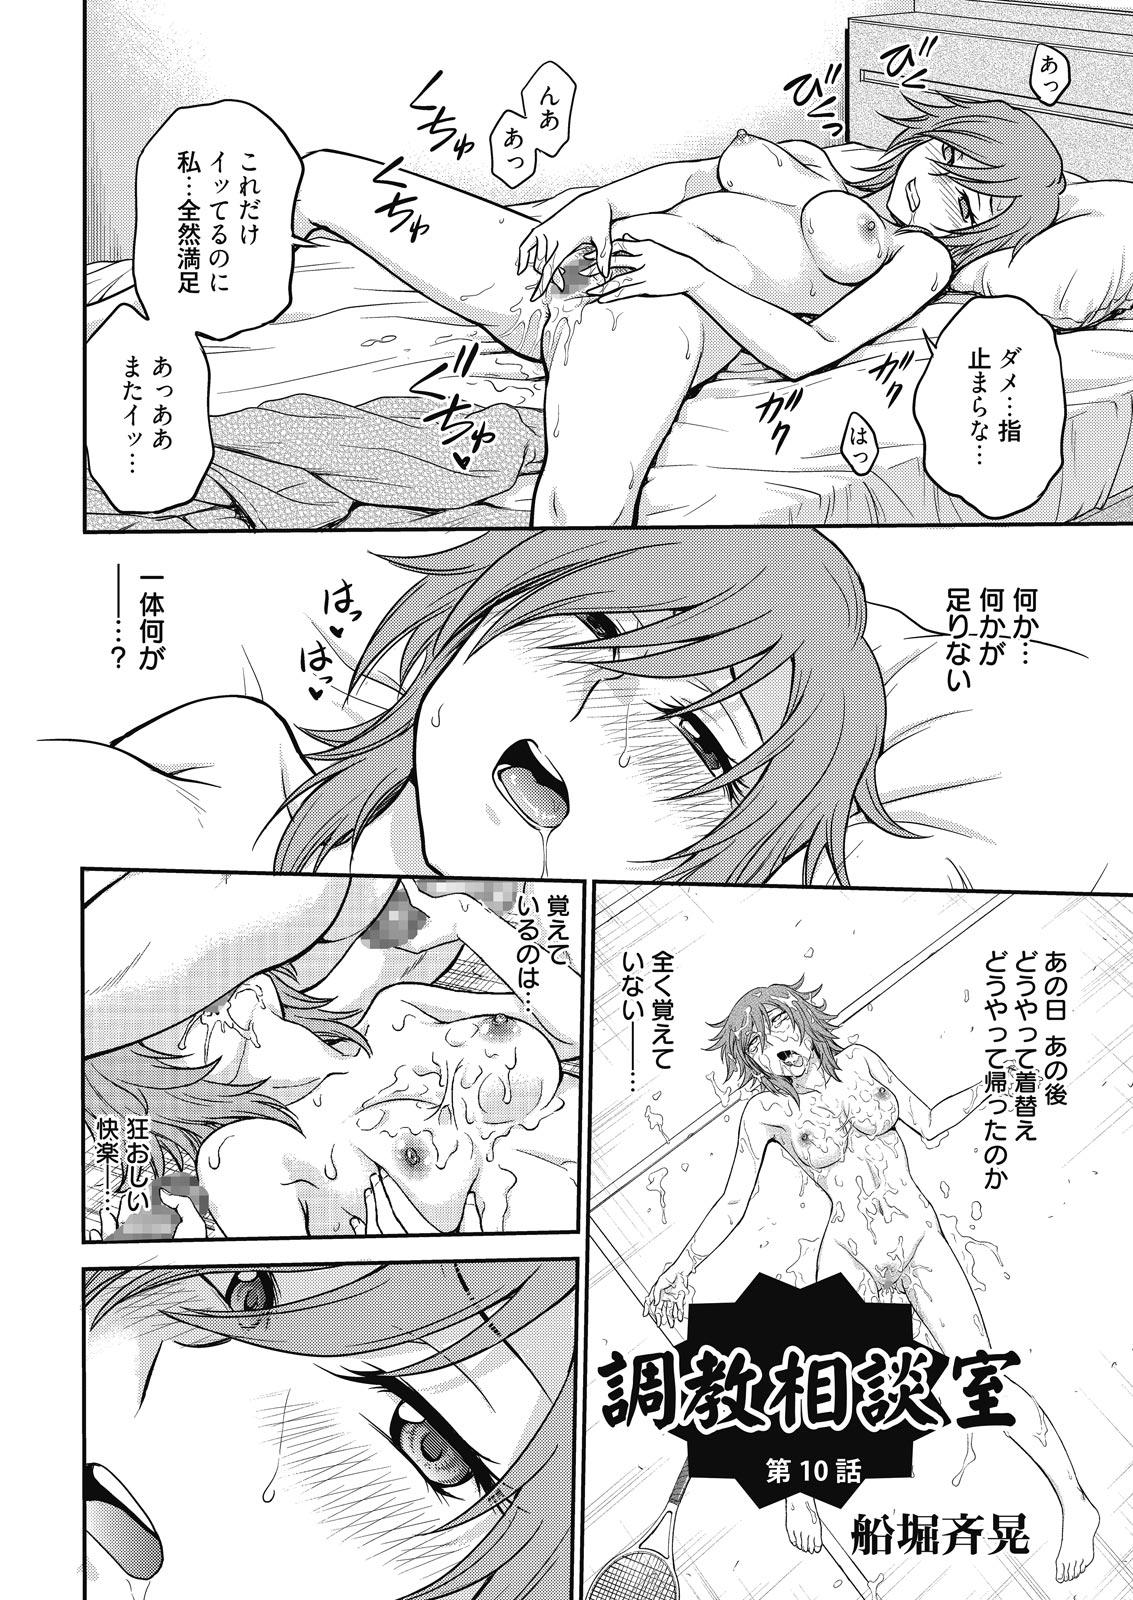 Web Manga Bangaichi Vol. 9 3